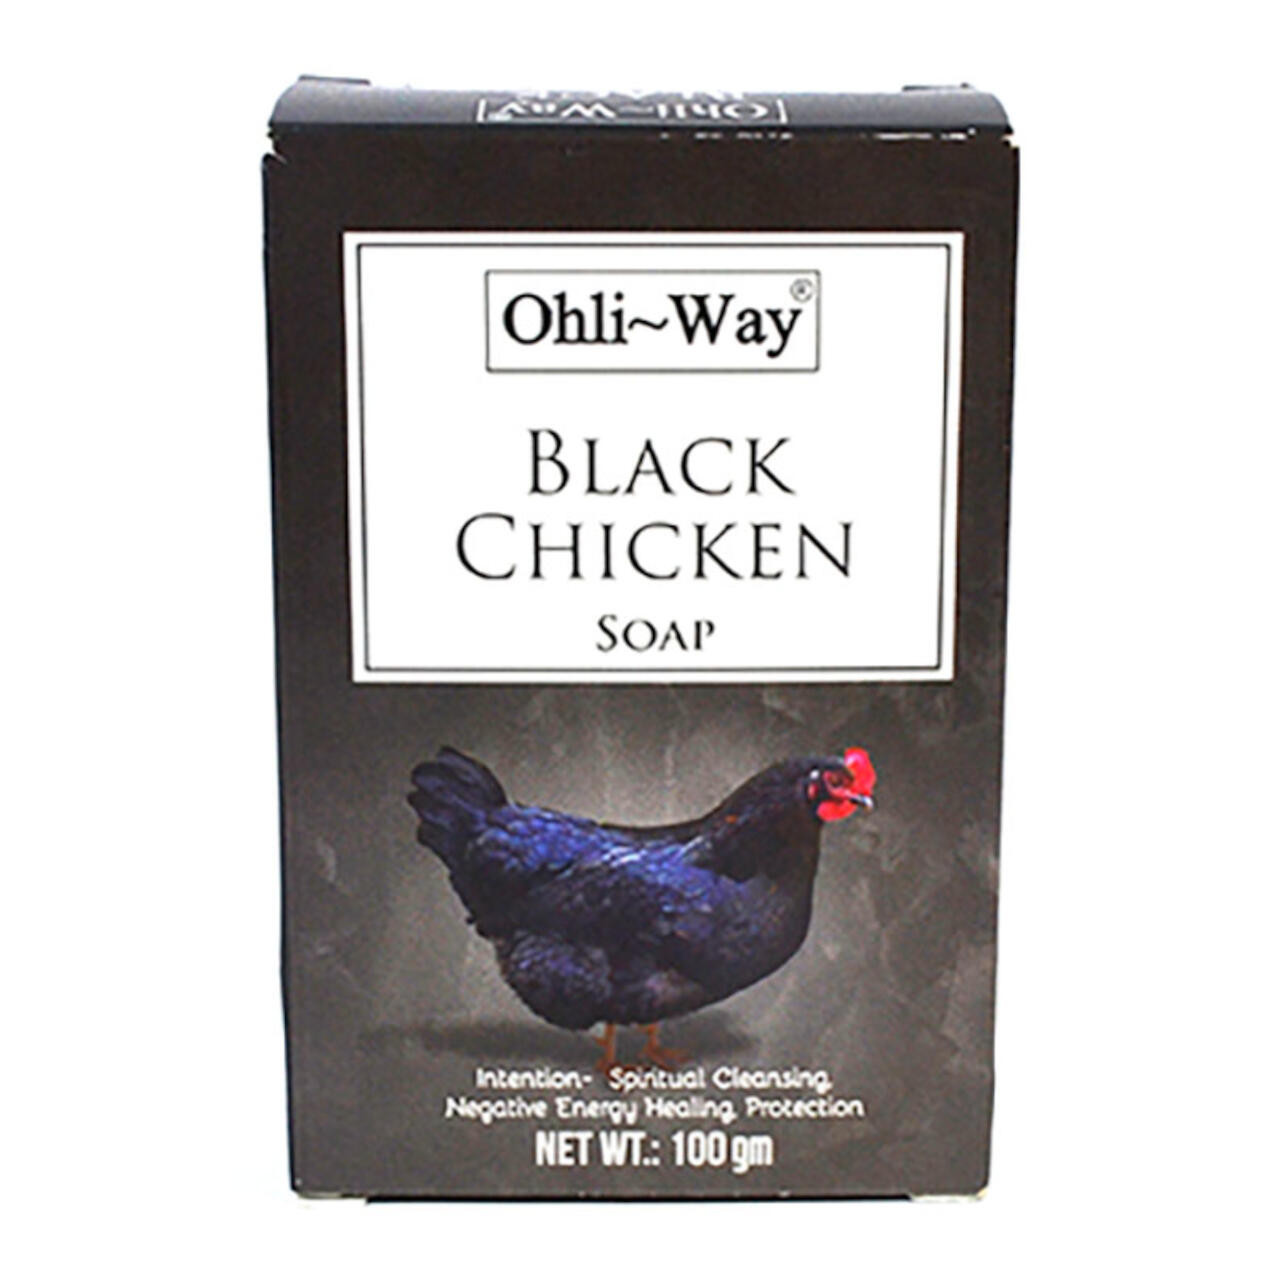 Black Chicken Soap Ohli-Way 100 gm